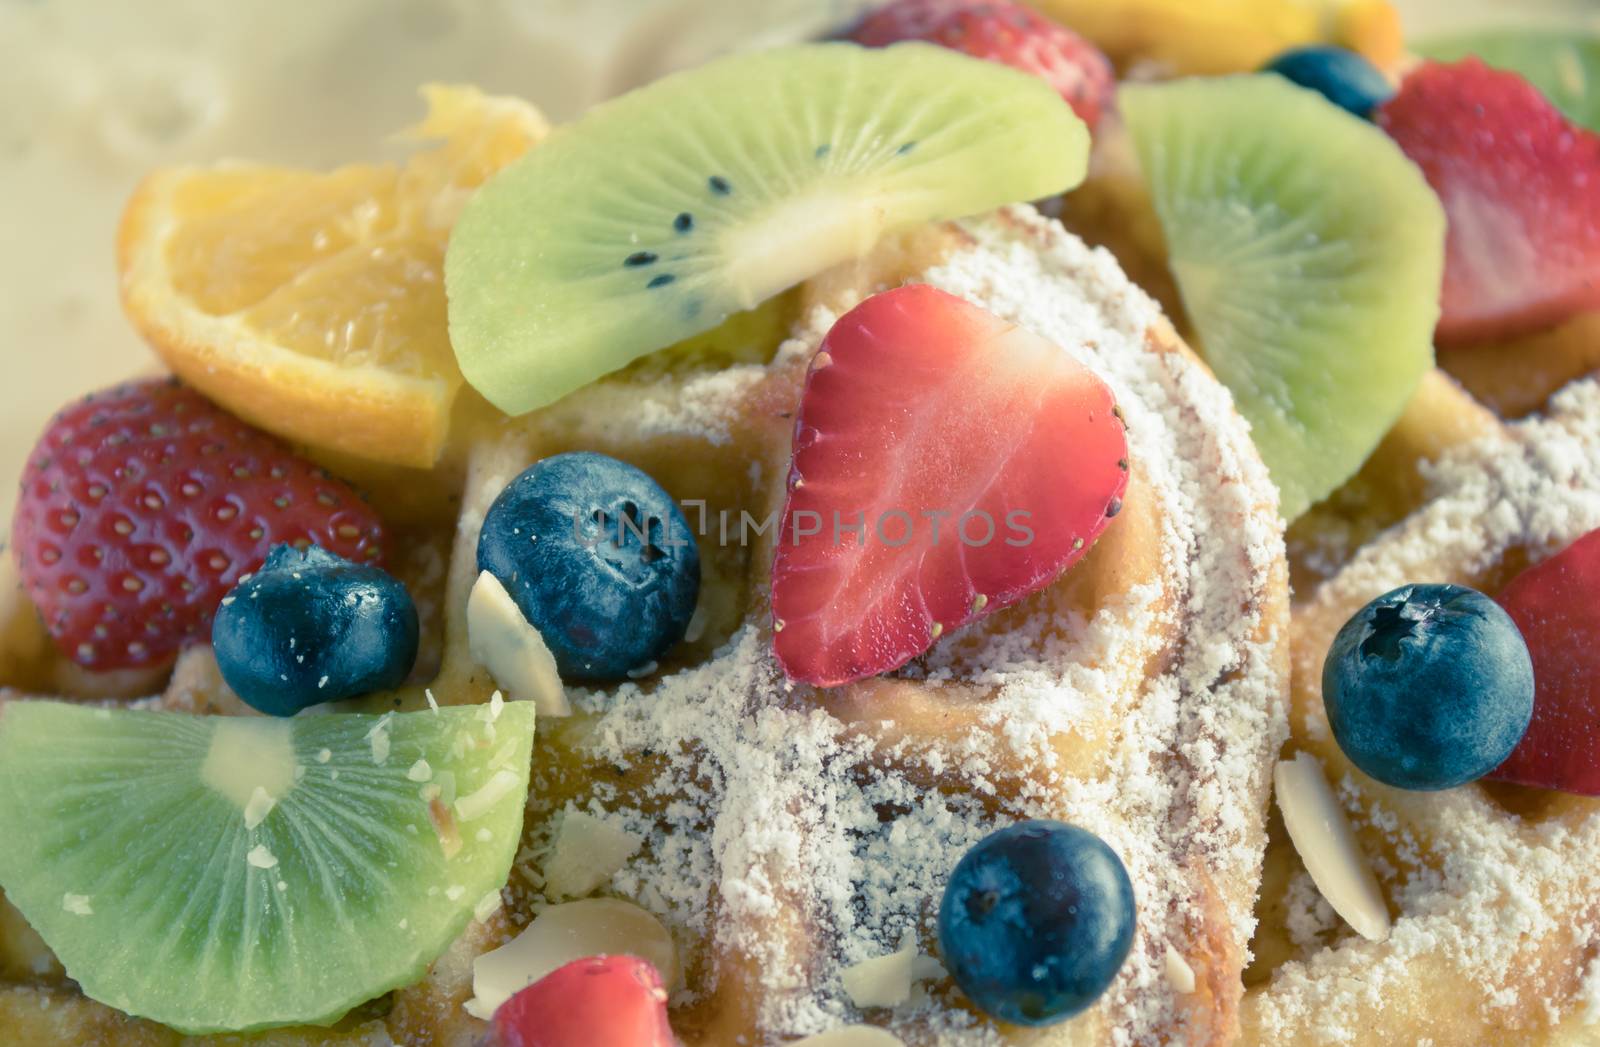 Vintage Strawberry Blueberry Kiwi Lemon Waffle Dessert Close Up. Fruity dessert food and drink category